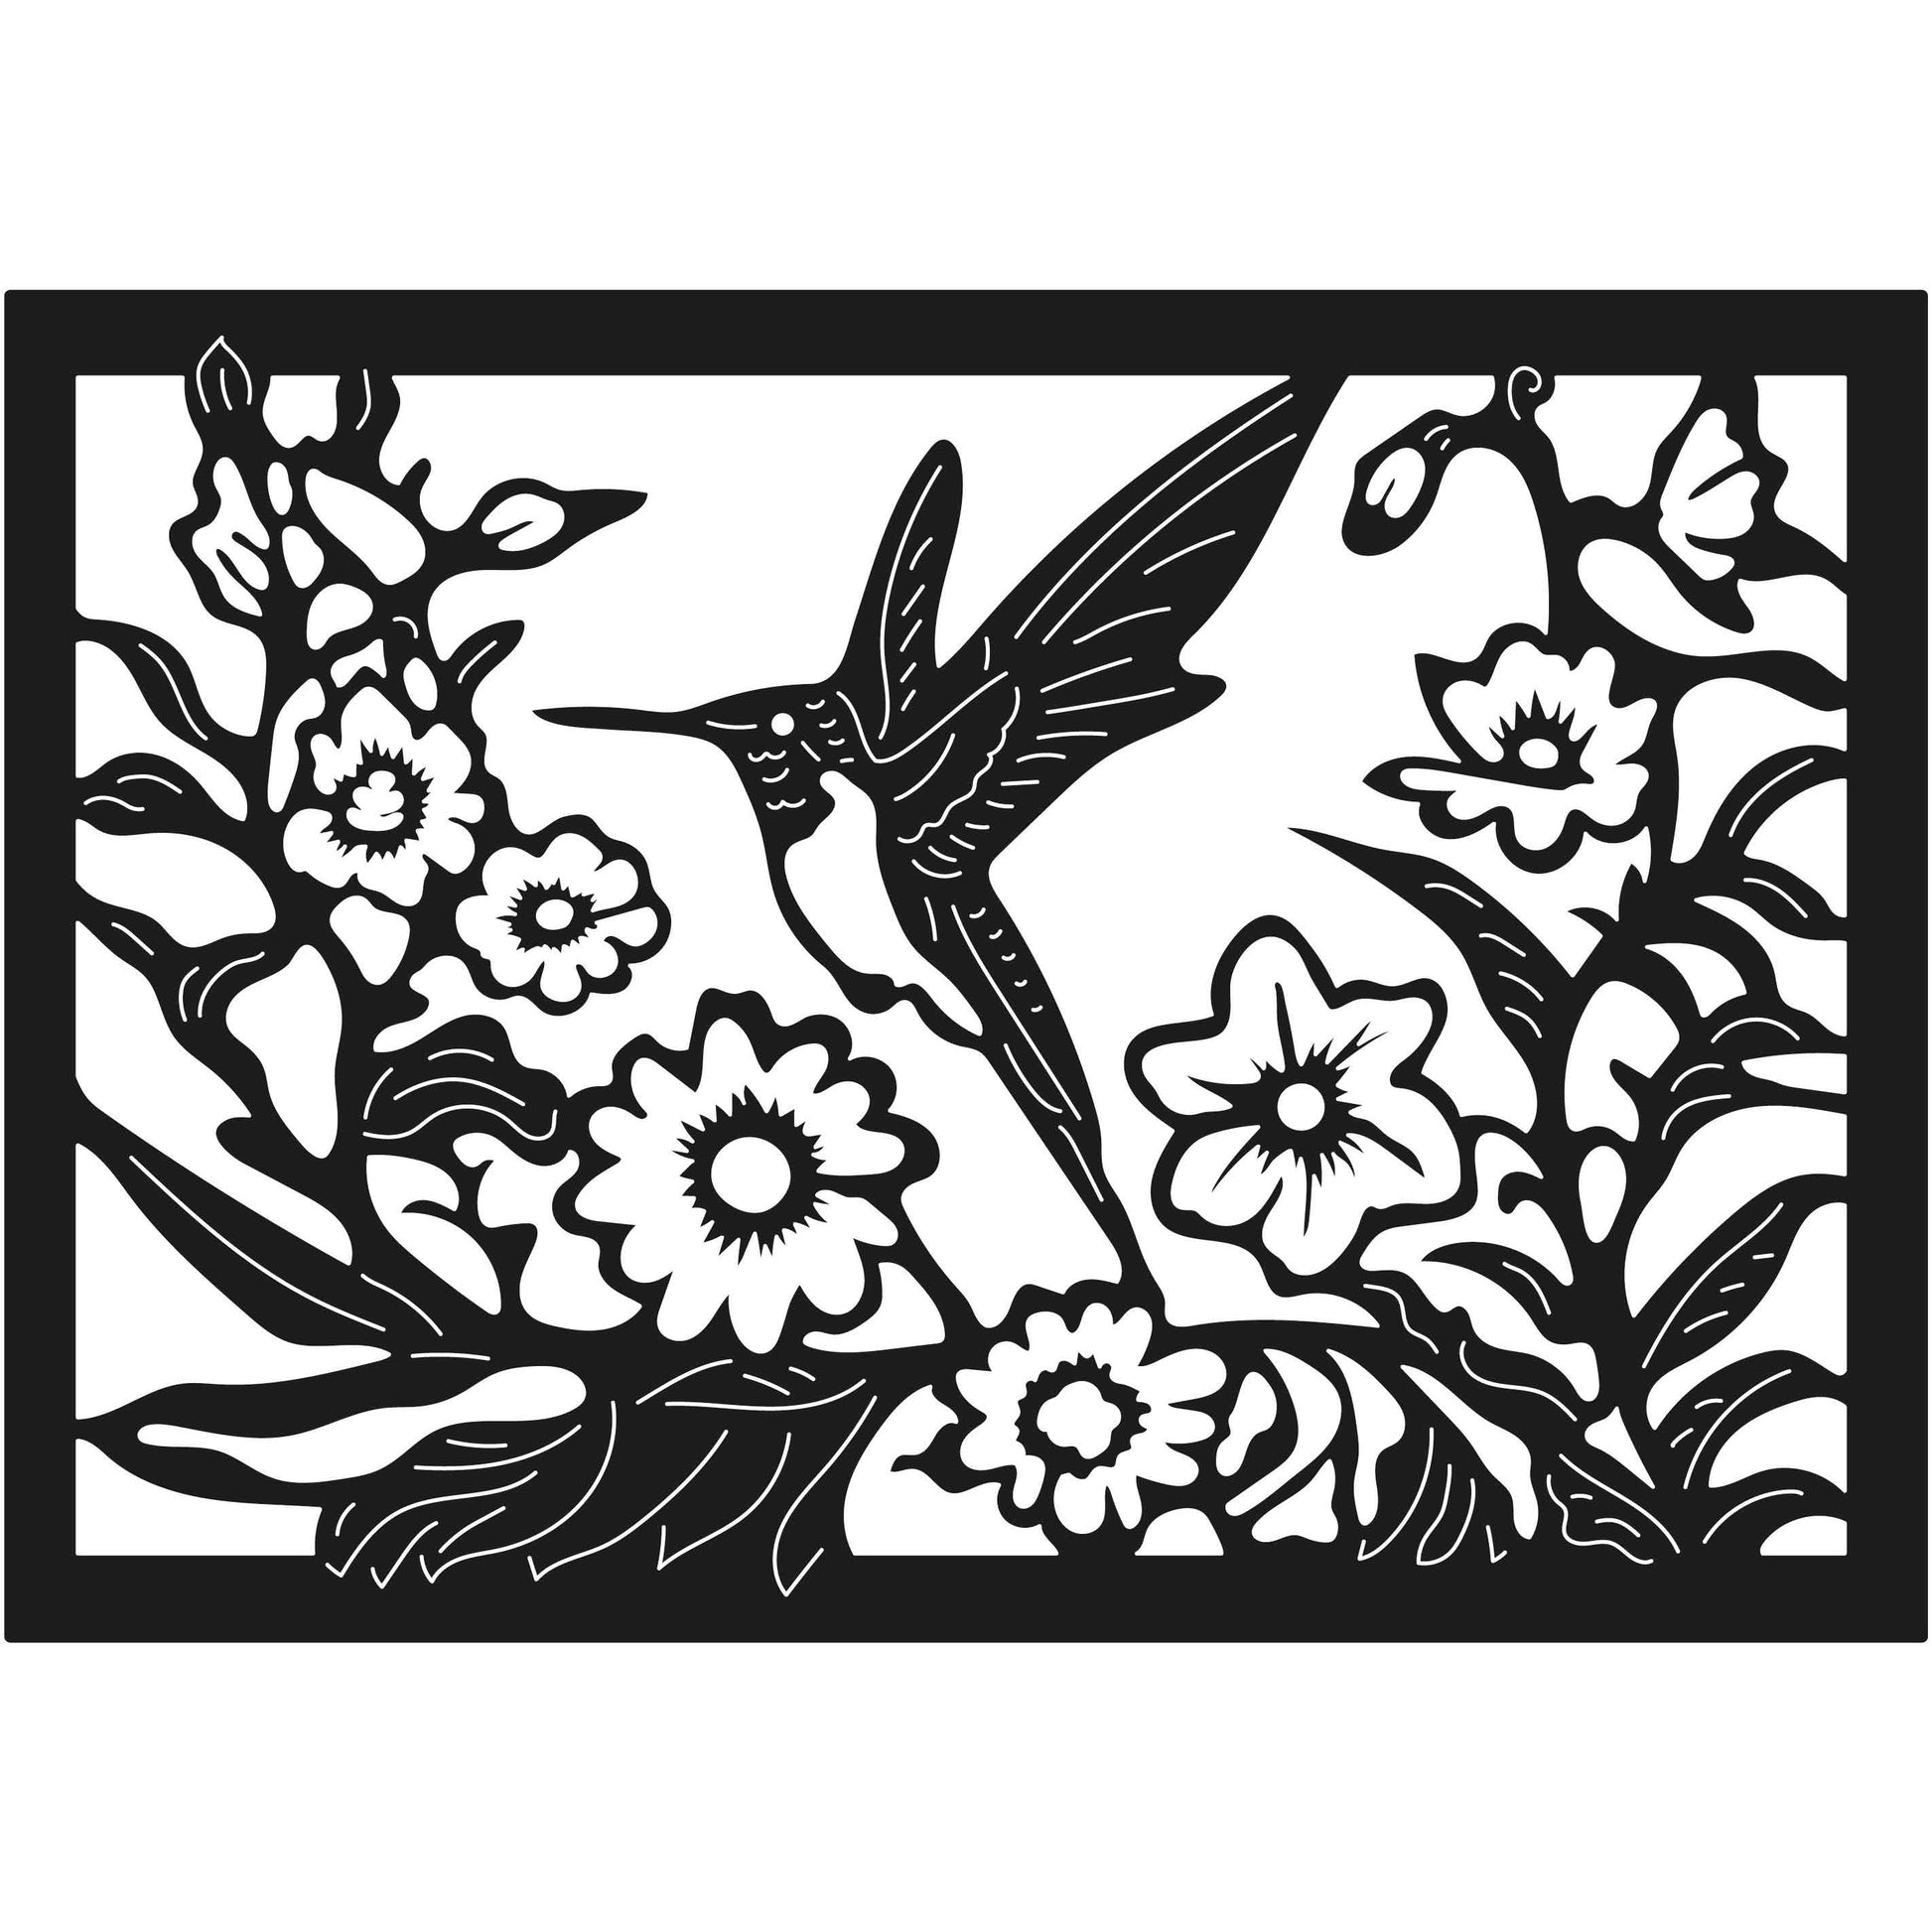 Hummingbird flower panel 24